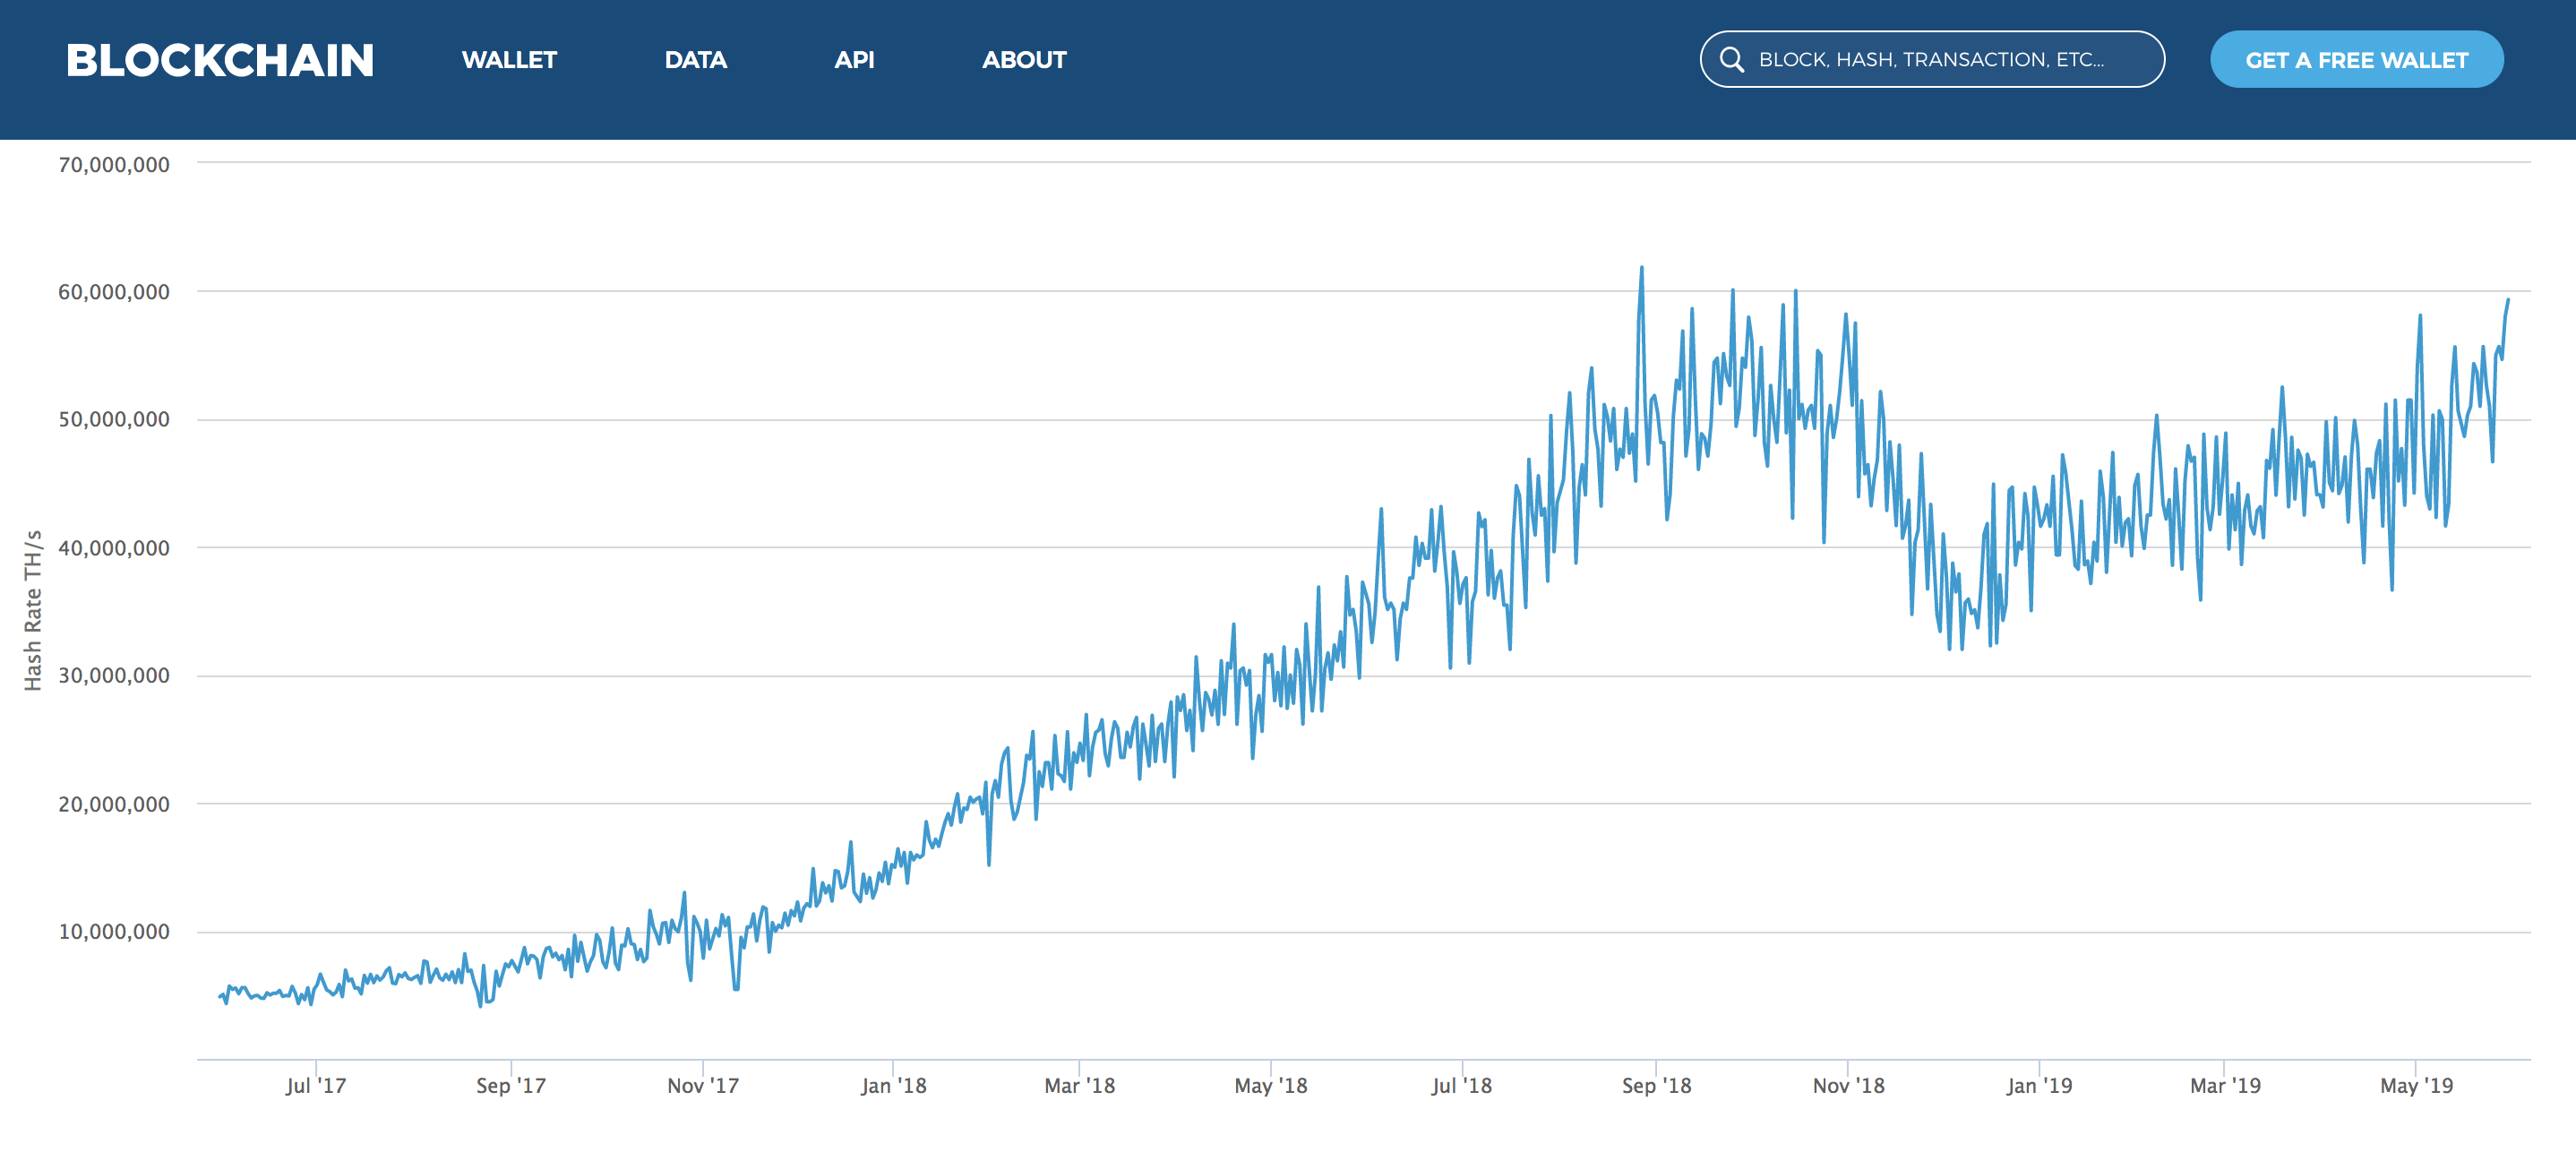 Hash Rate du Bitcoin selon blockchain.com depuis juillet 2017.